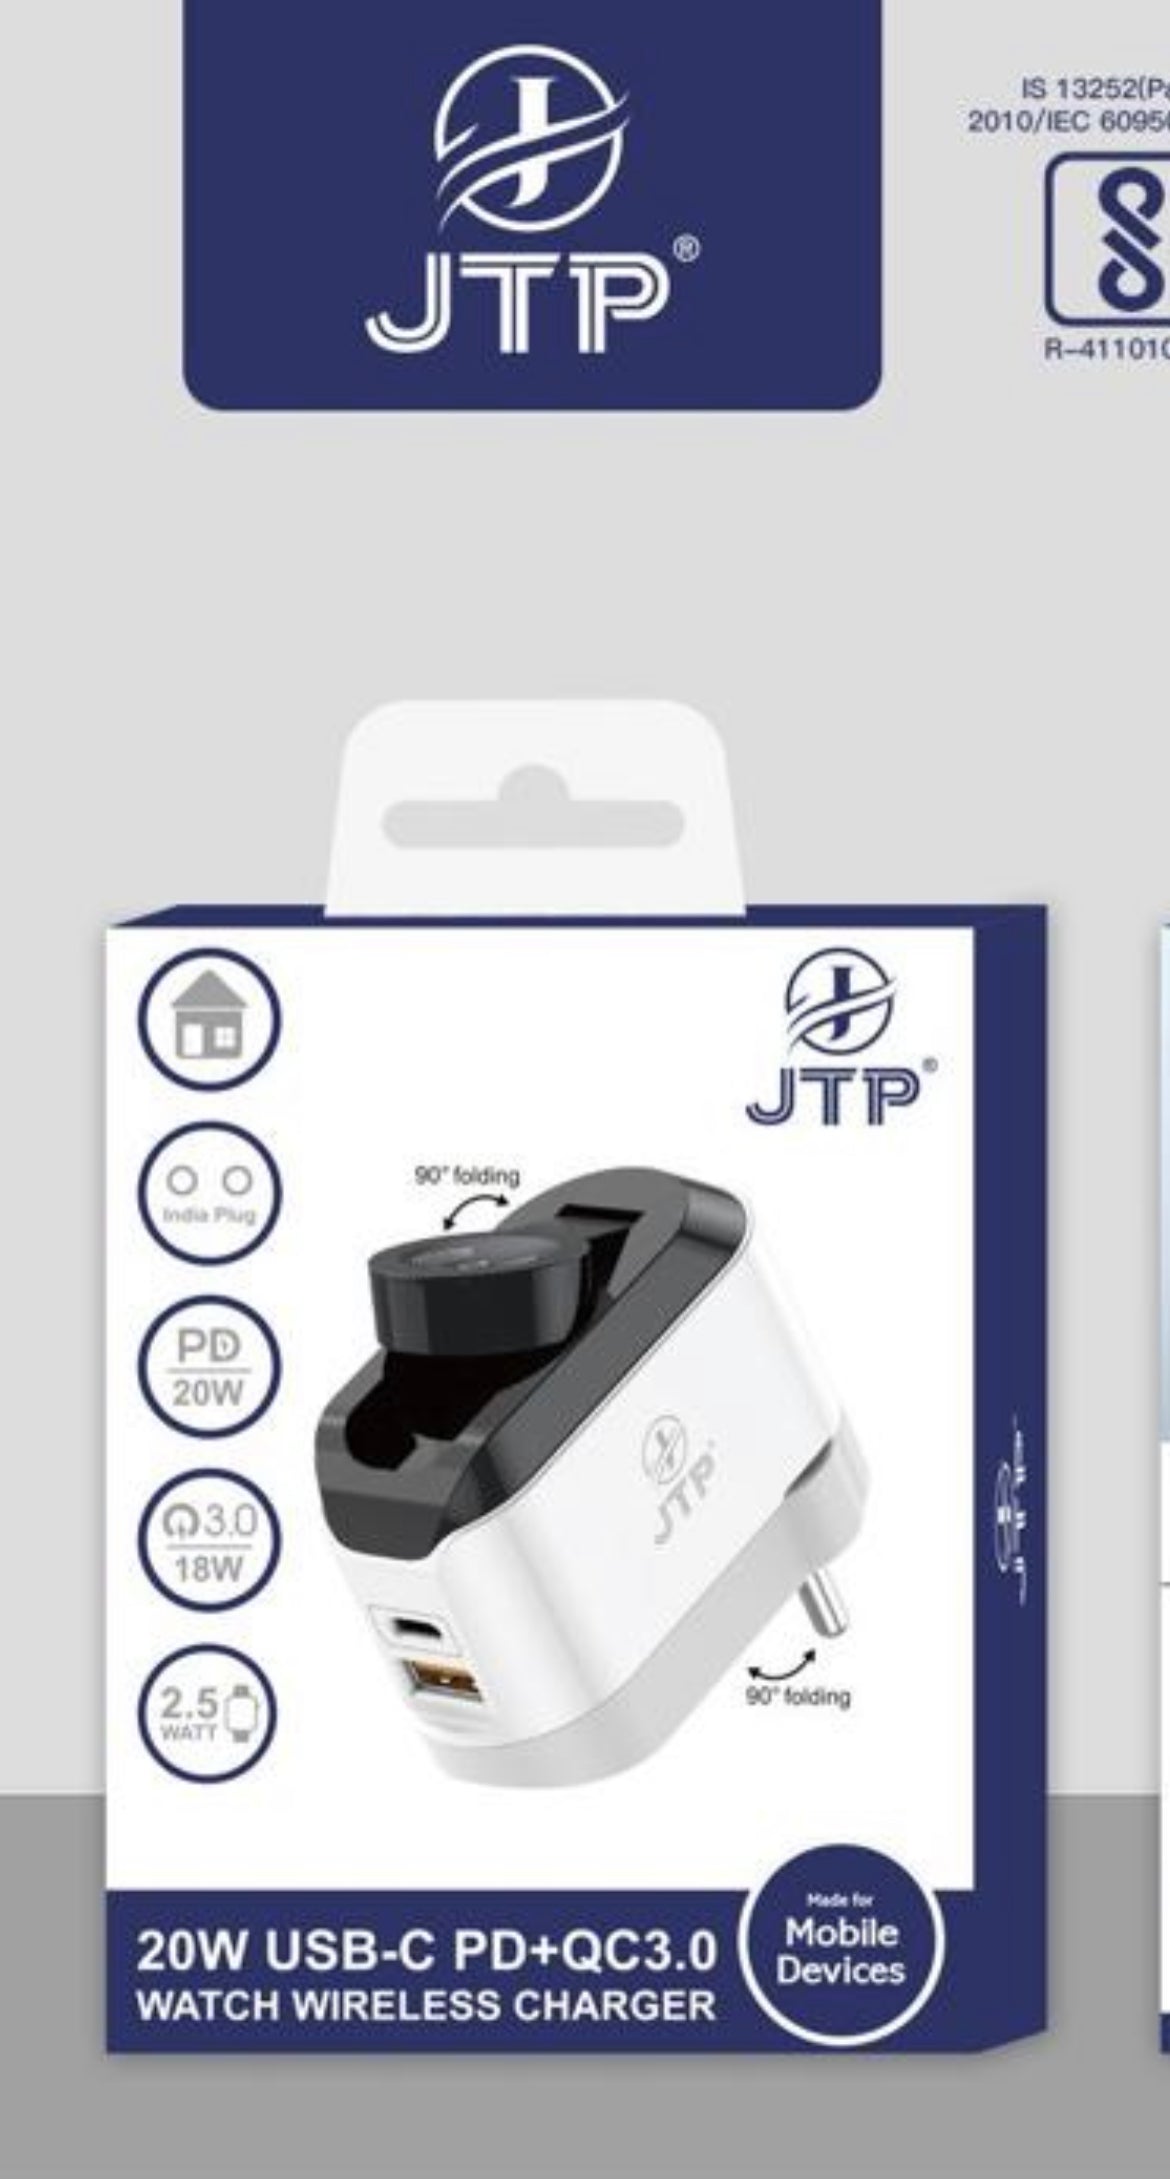 JTP 20W USB-C PD+QC3.0 WATCH WIRELESS CHARGER